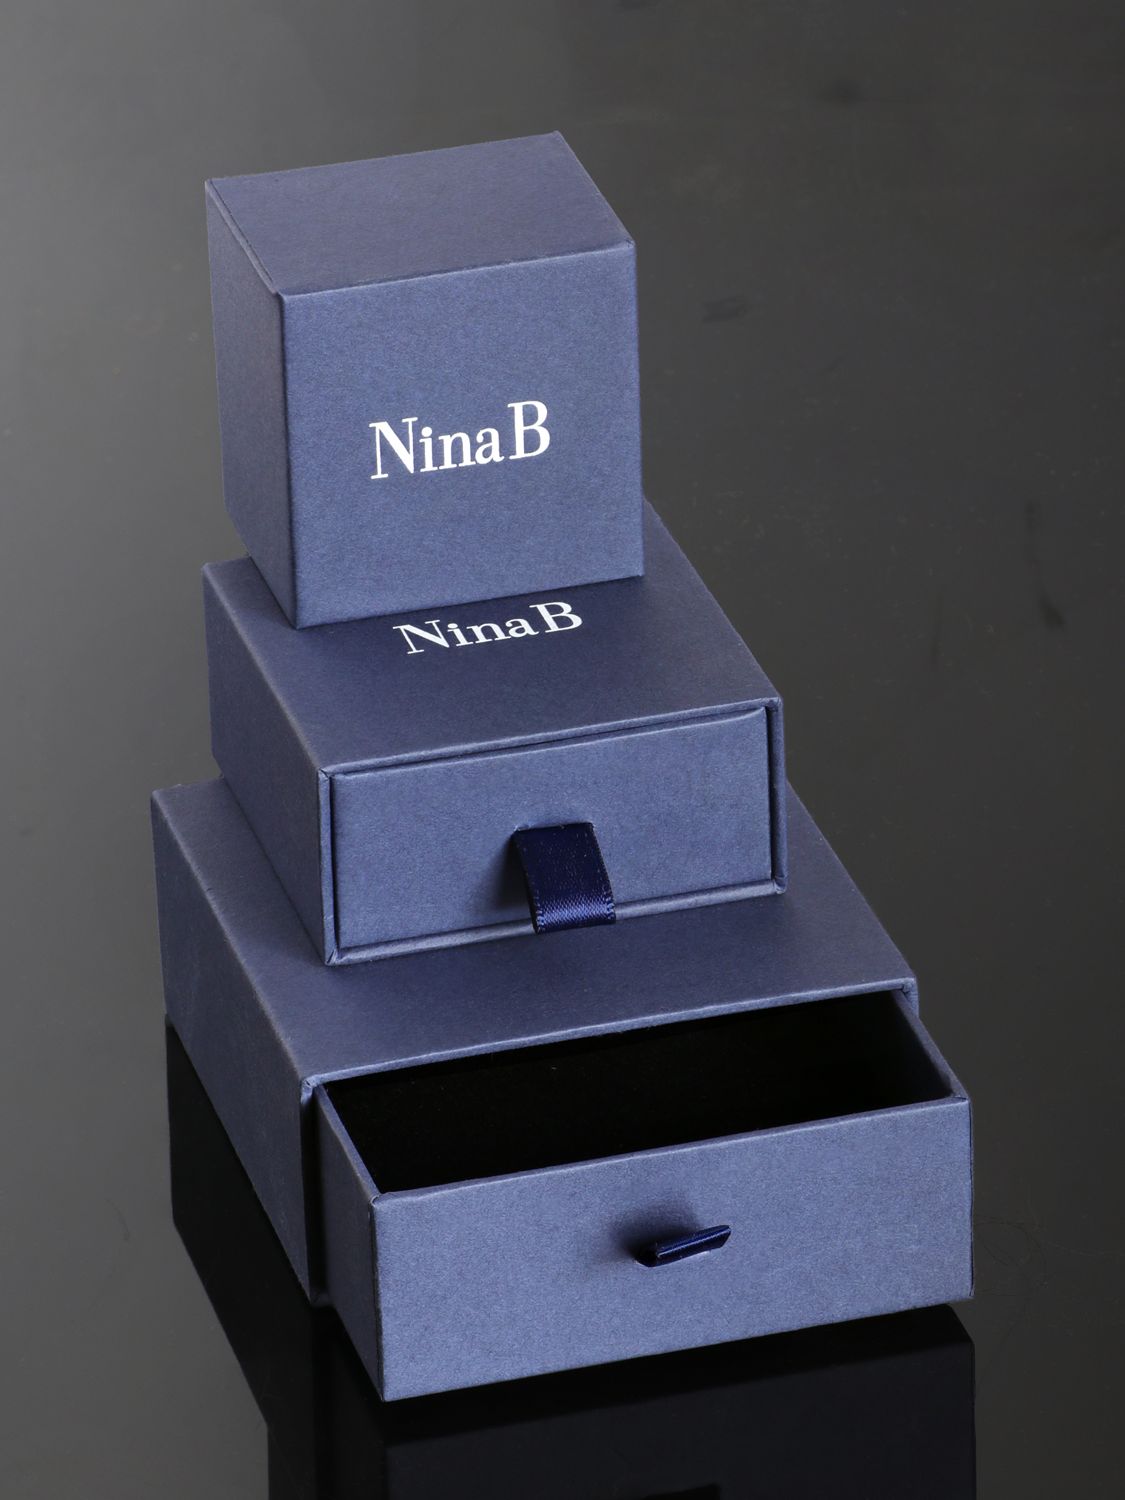 Buy Nina B Flower Stud Earrings, Silver/Gold Online at johnlewis.com